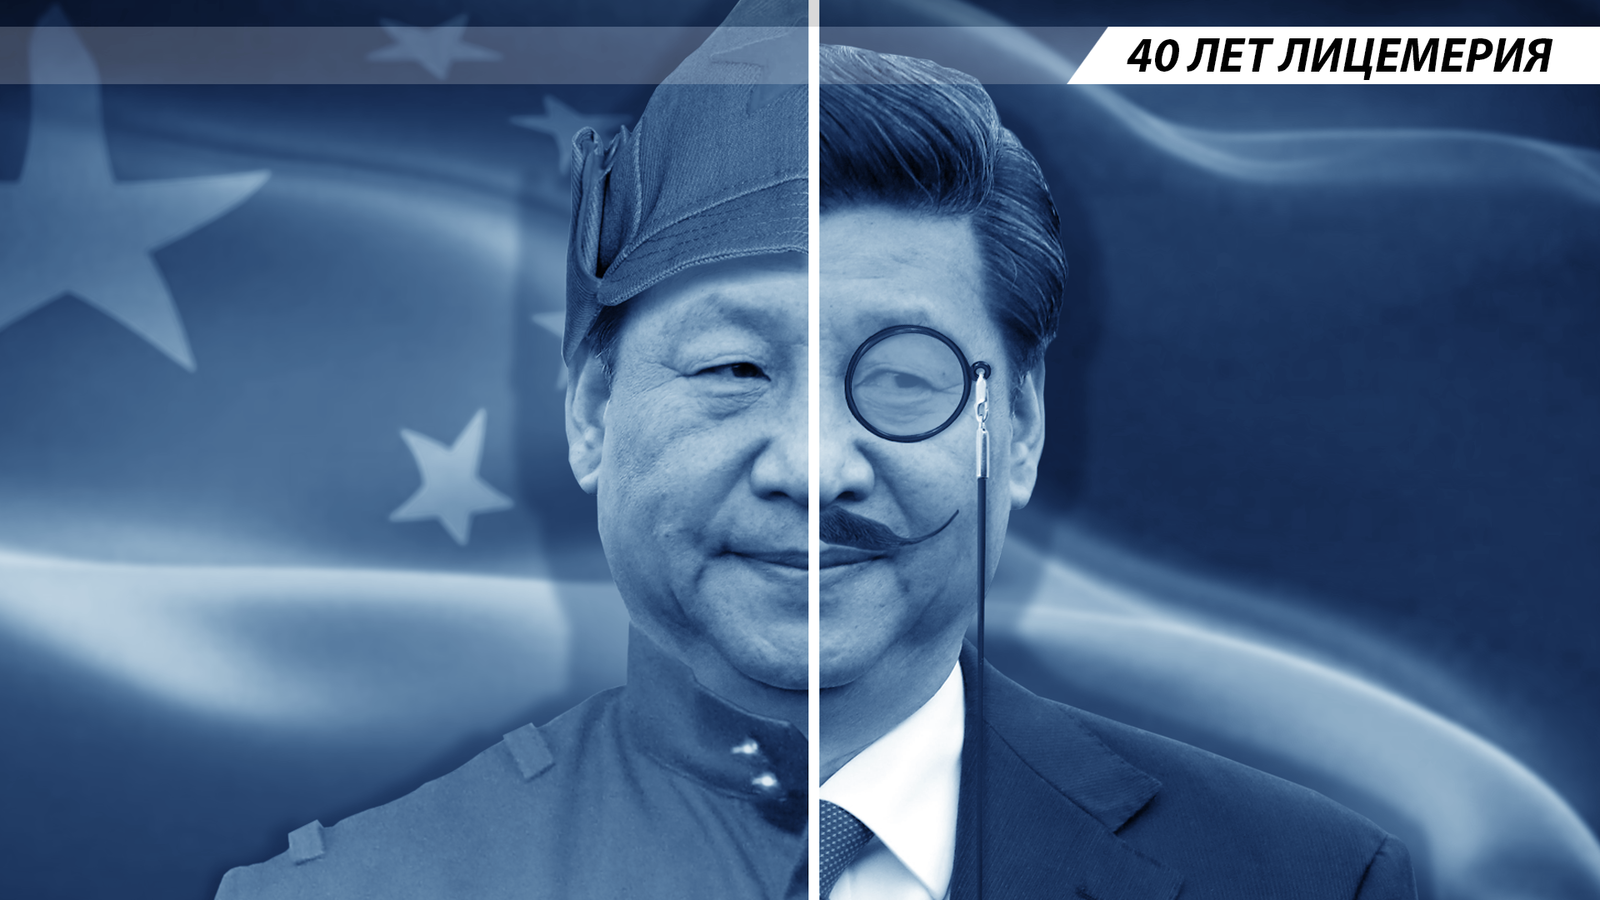 40 years of hypocrisy - China, Economy, Socialism, Ideology, Longpost, Statistics, Politics